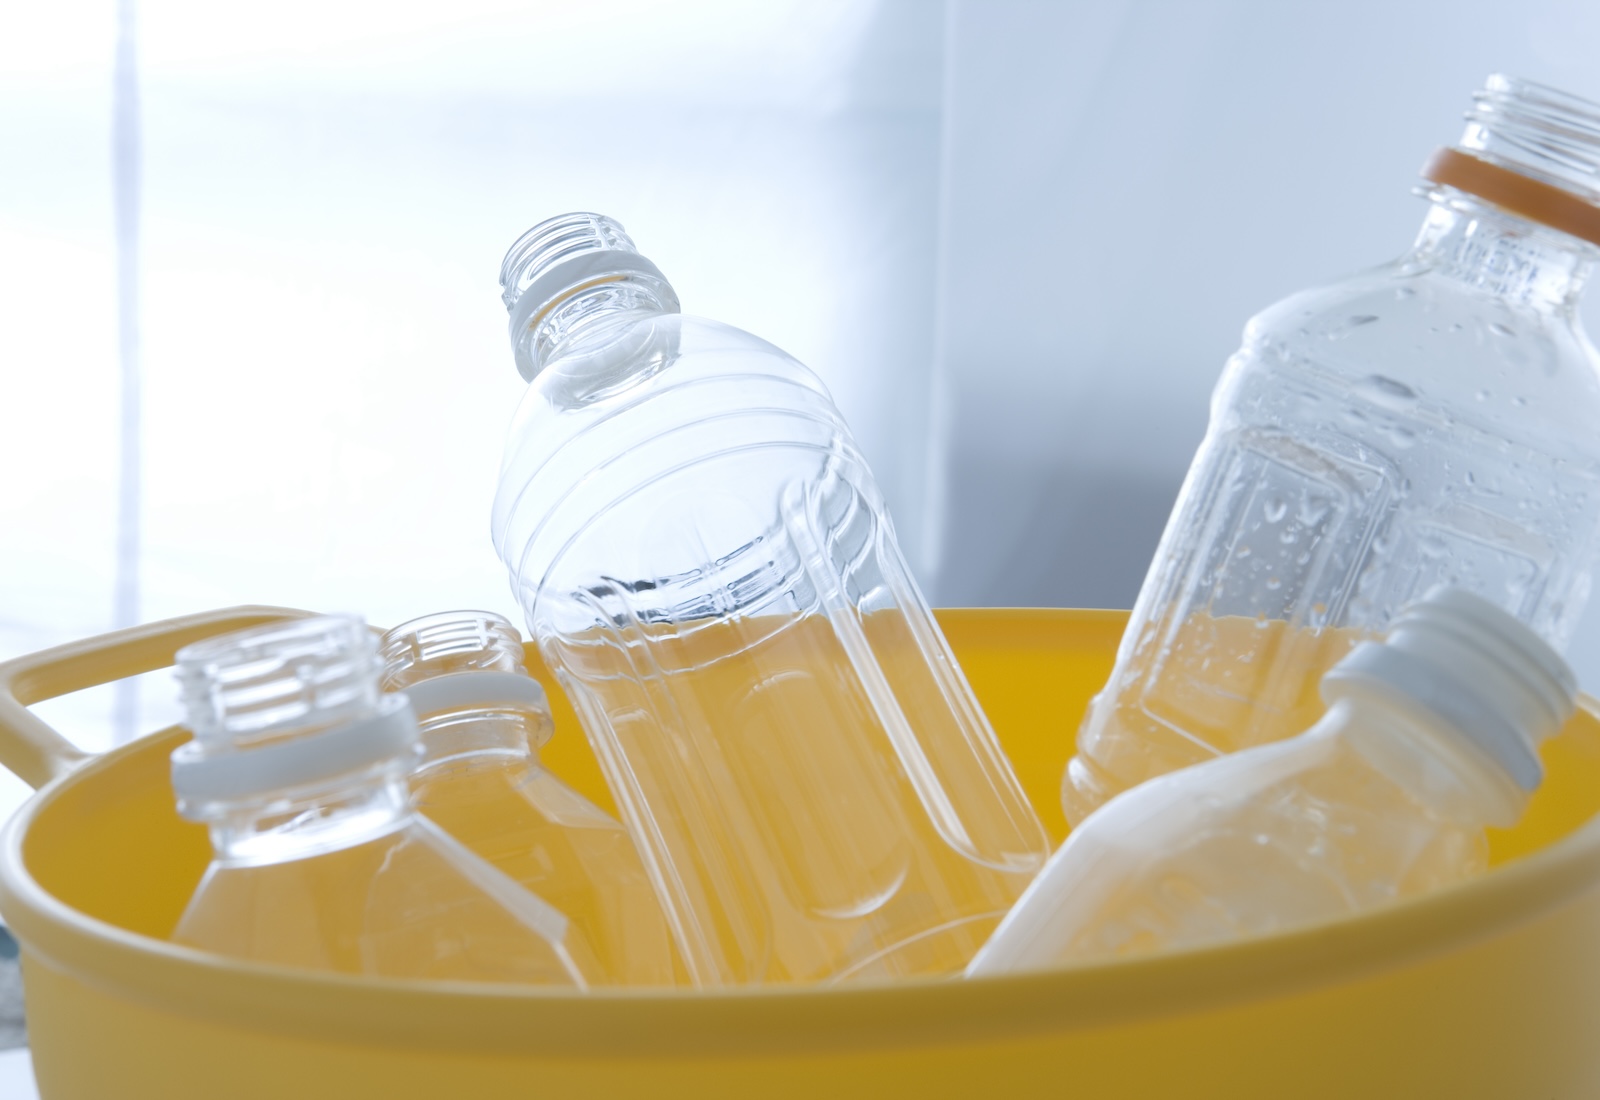 Empty plastic water bottles in a yellow bucket.